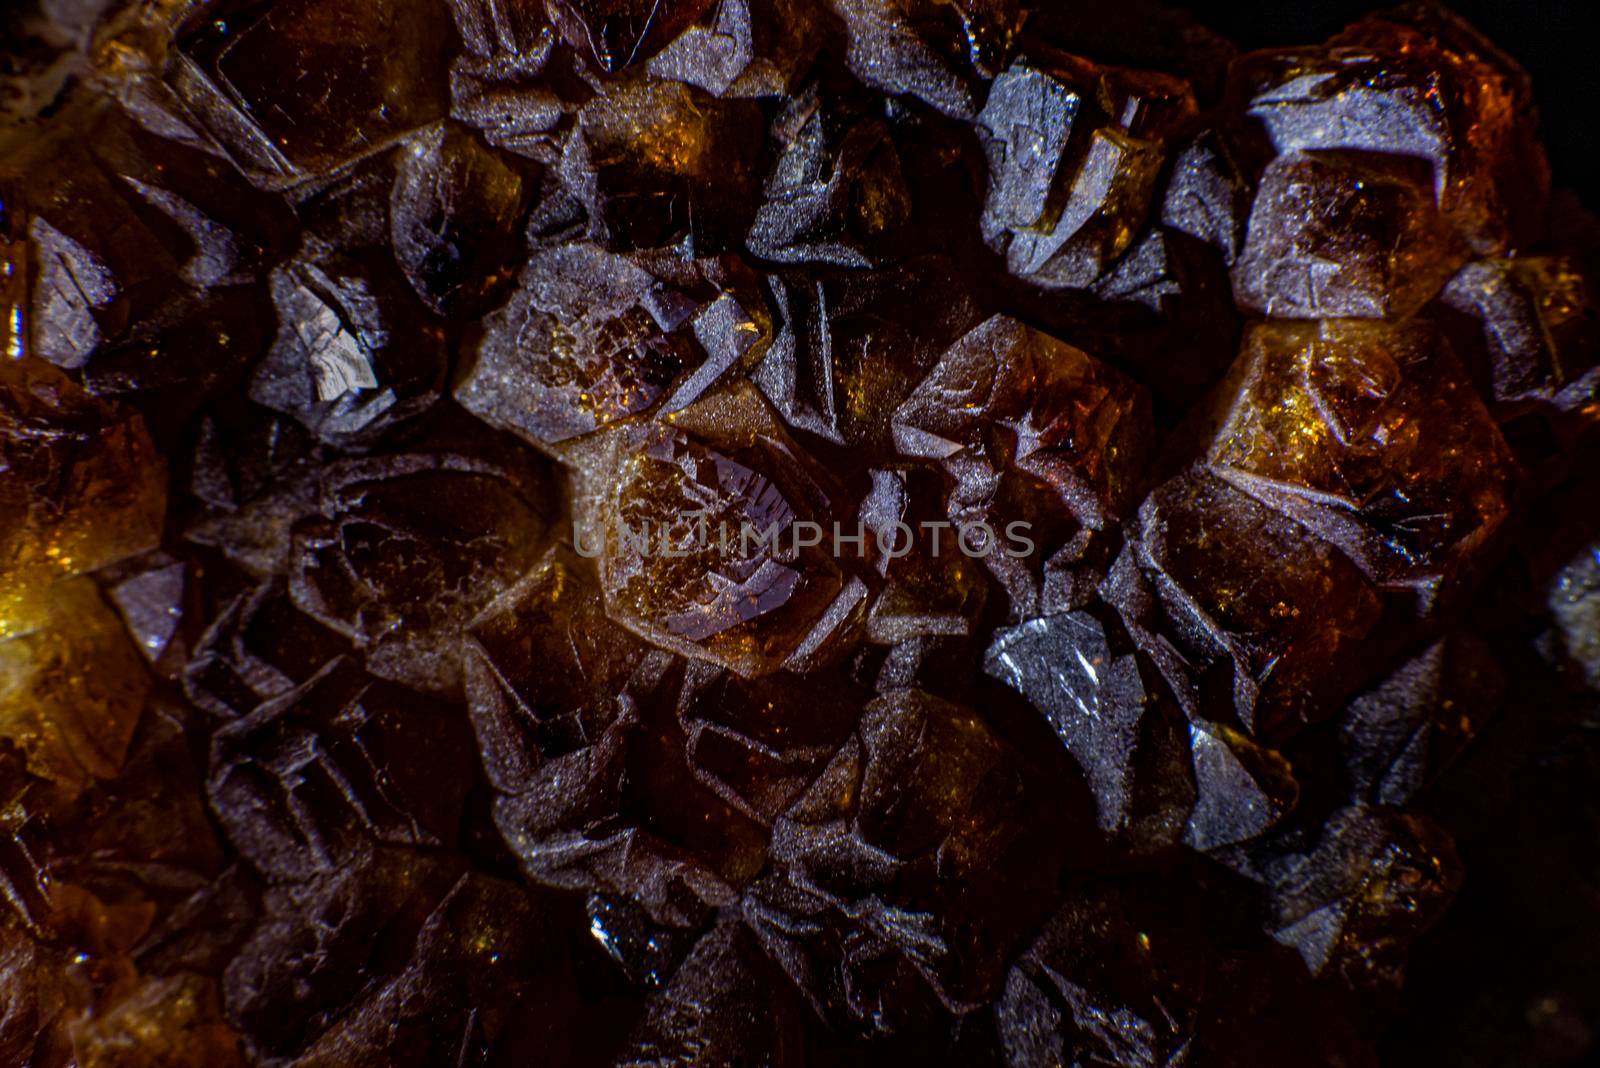 Dark Citrine natural quartz semigem geode crystals geological mineral Background. Looks like coals. High quality photo